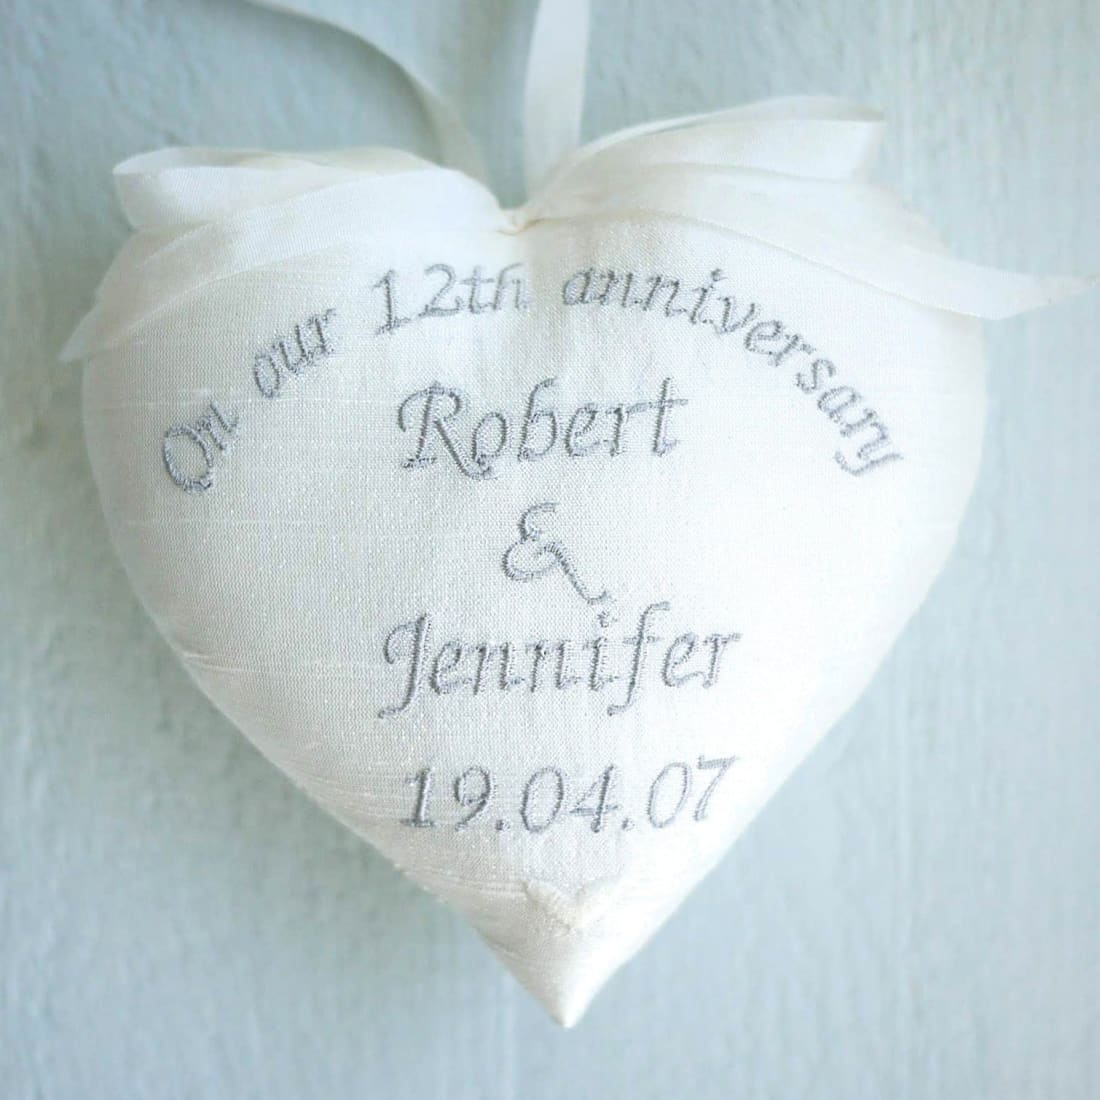 12th Silk Wedding Anniversary Gift Heart